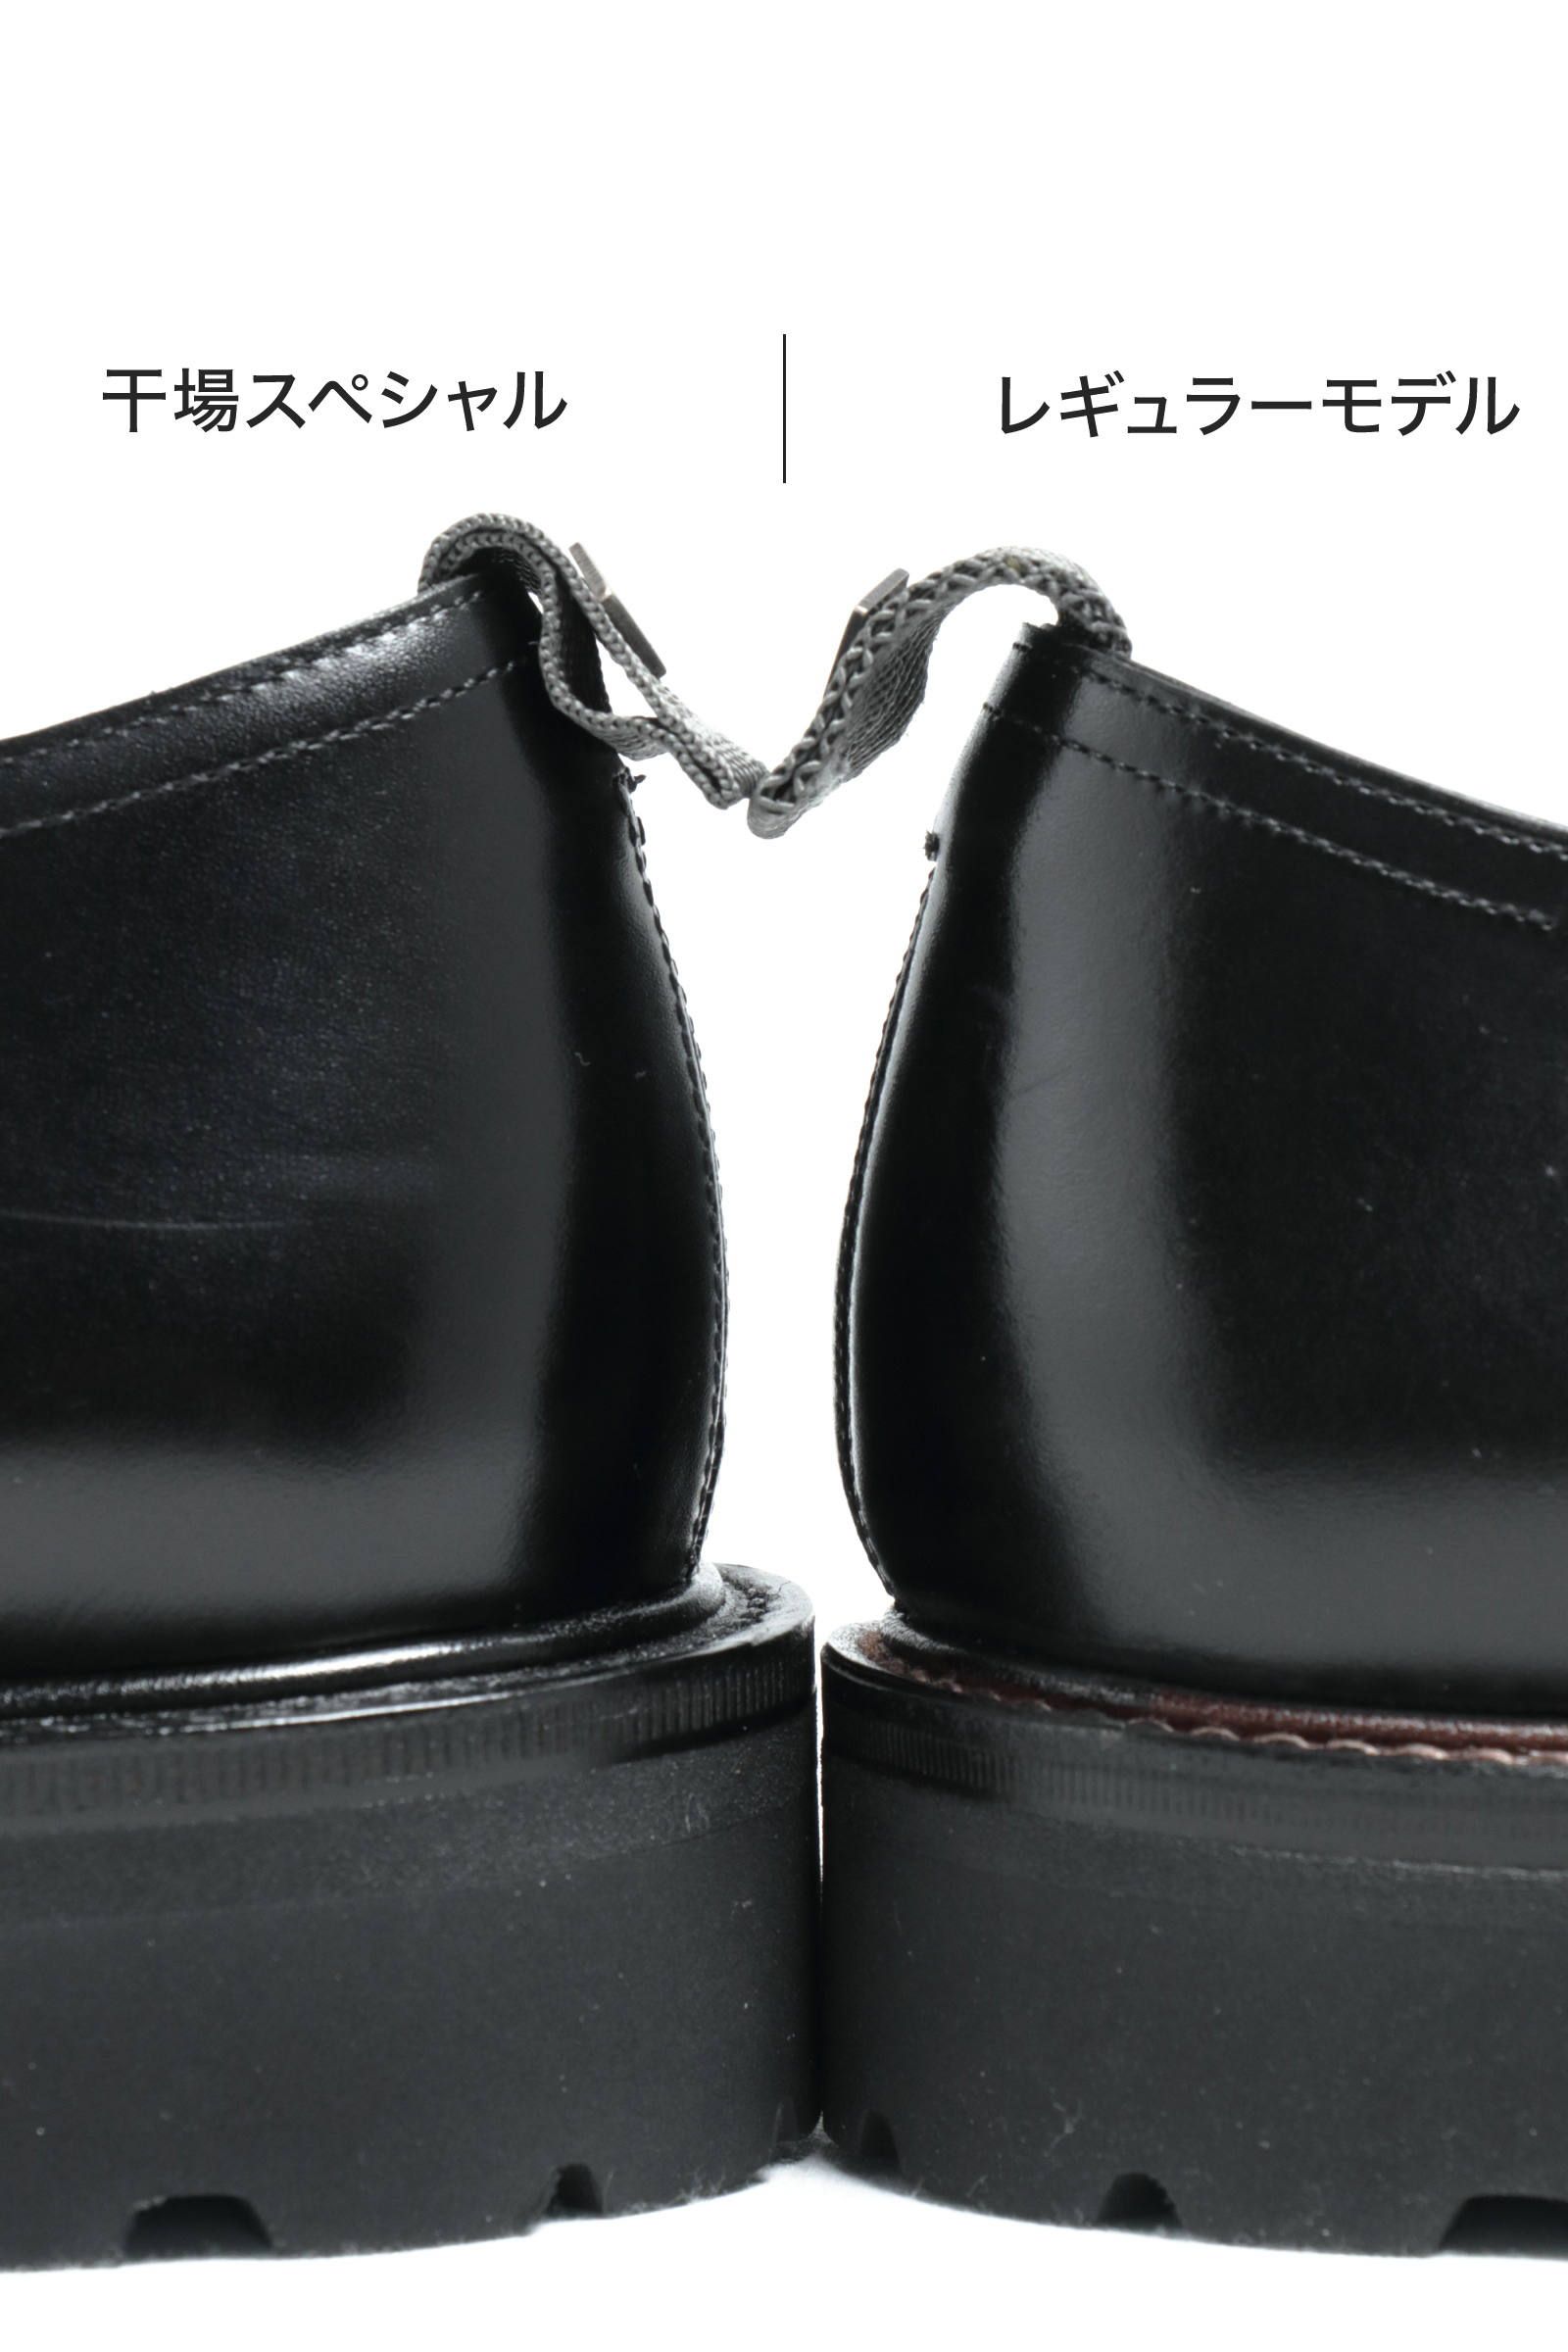 WH - 【干場スペシャル】 ボカルーカーフ プレーントゥ シューズ 革靴 